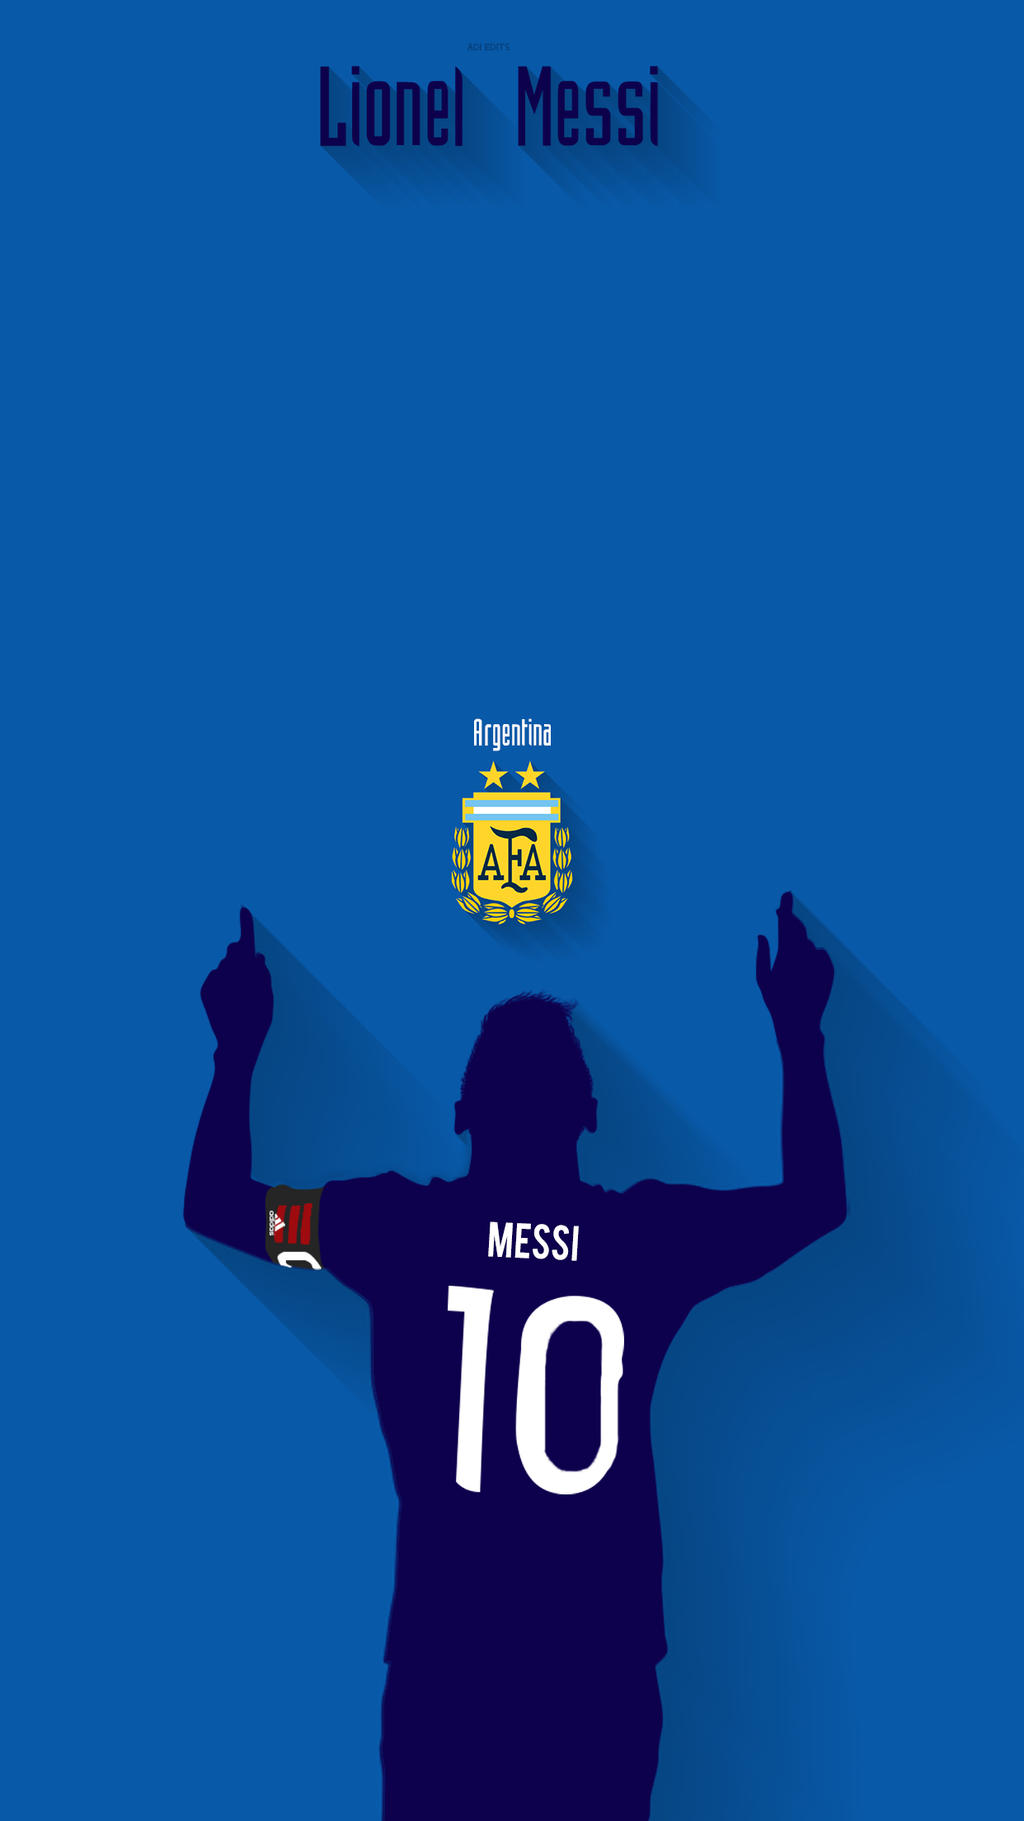 Lionel Messi Argentina Lockscreen Wallpaper HD by adi-149 on DeviantArt